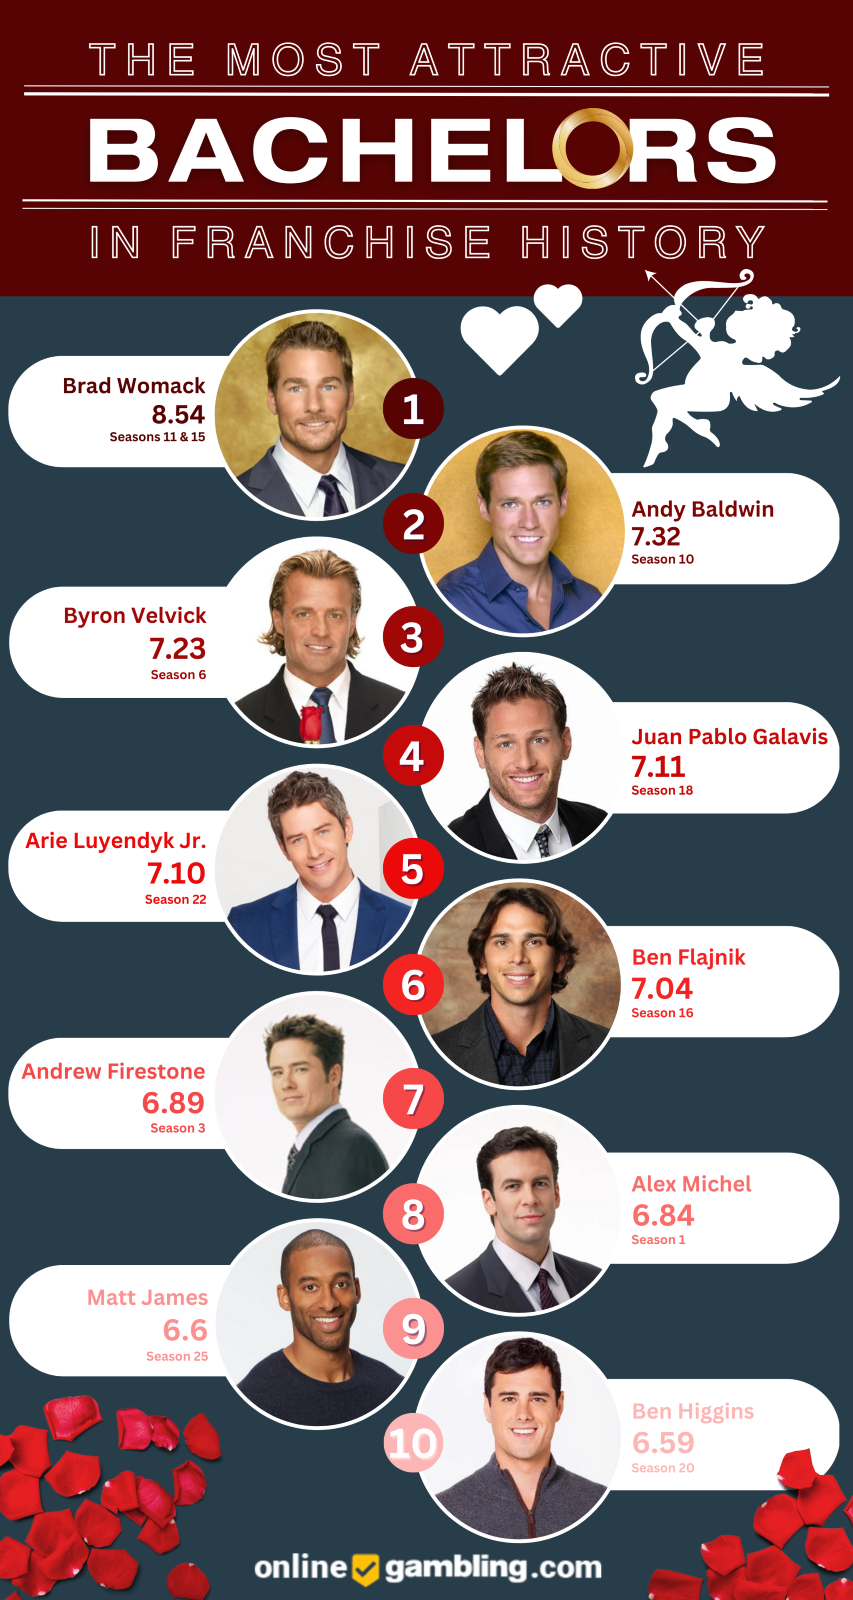 "Bachelor" stars ranked.